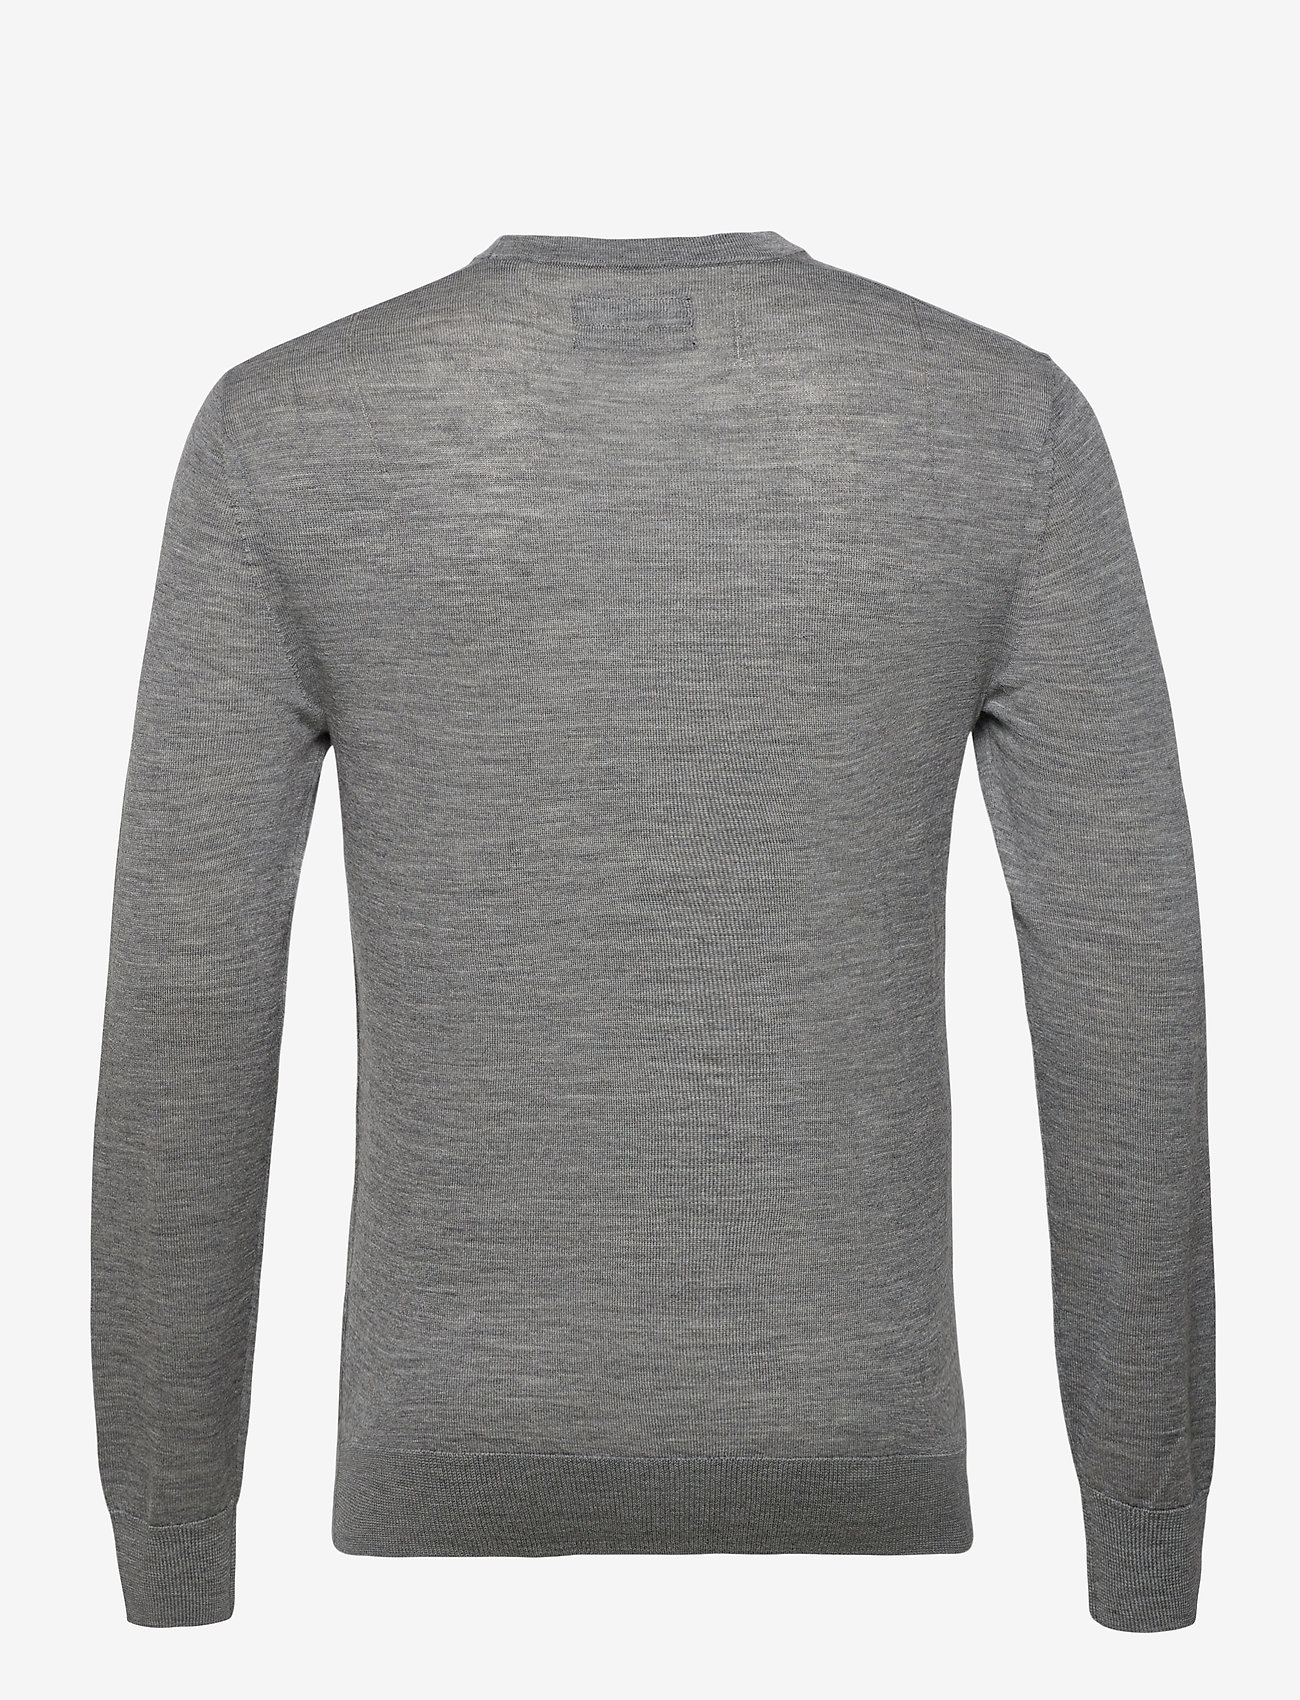 AllSaints - MODE MERINO CREW - basic knitwear - grey marl - 1